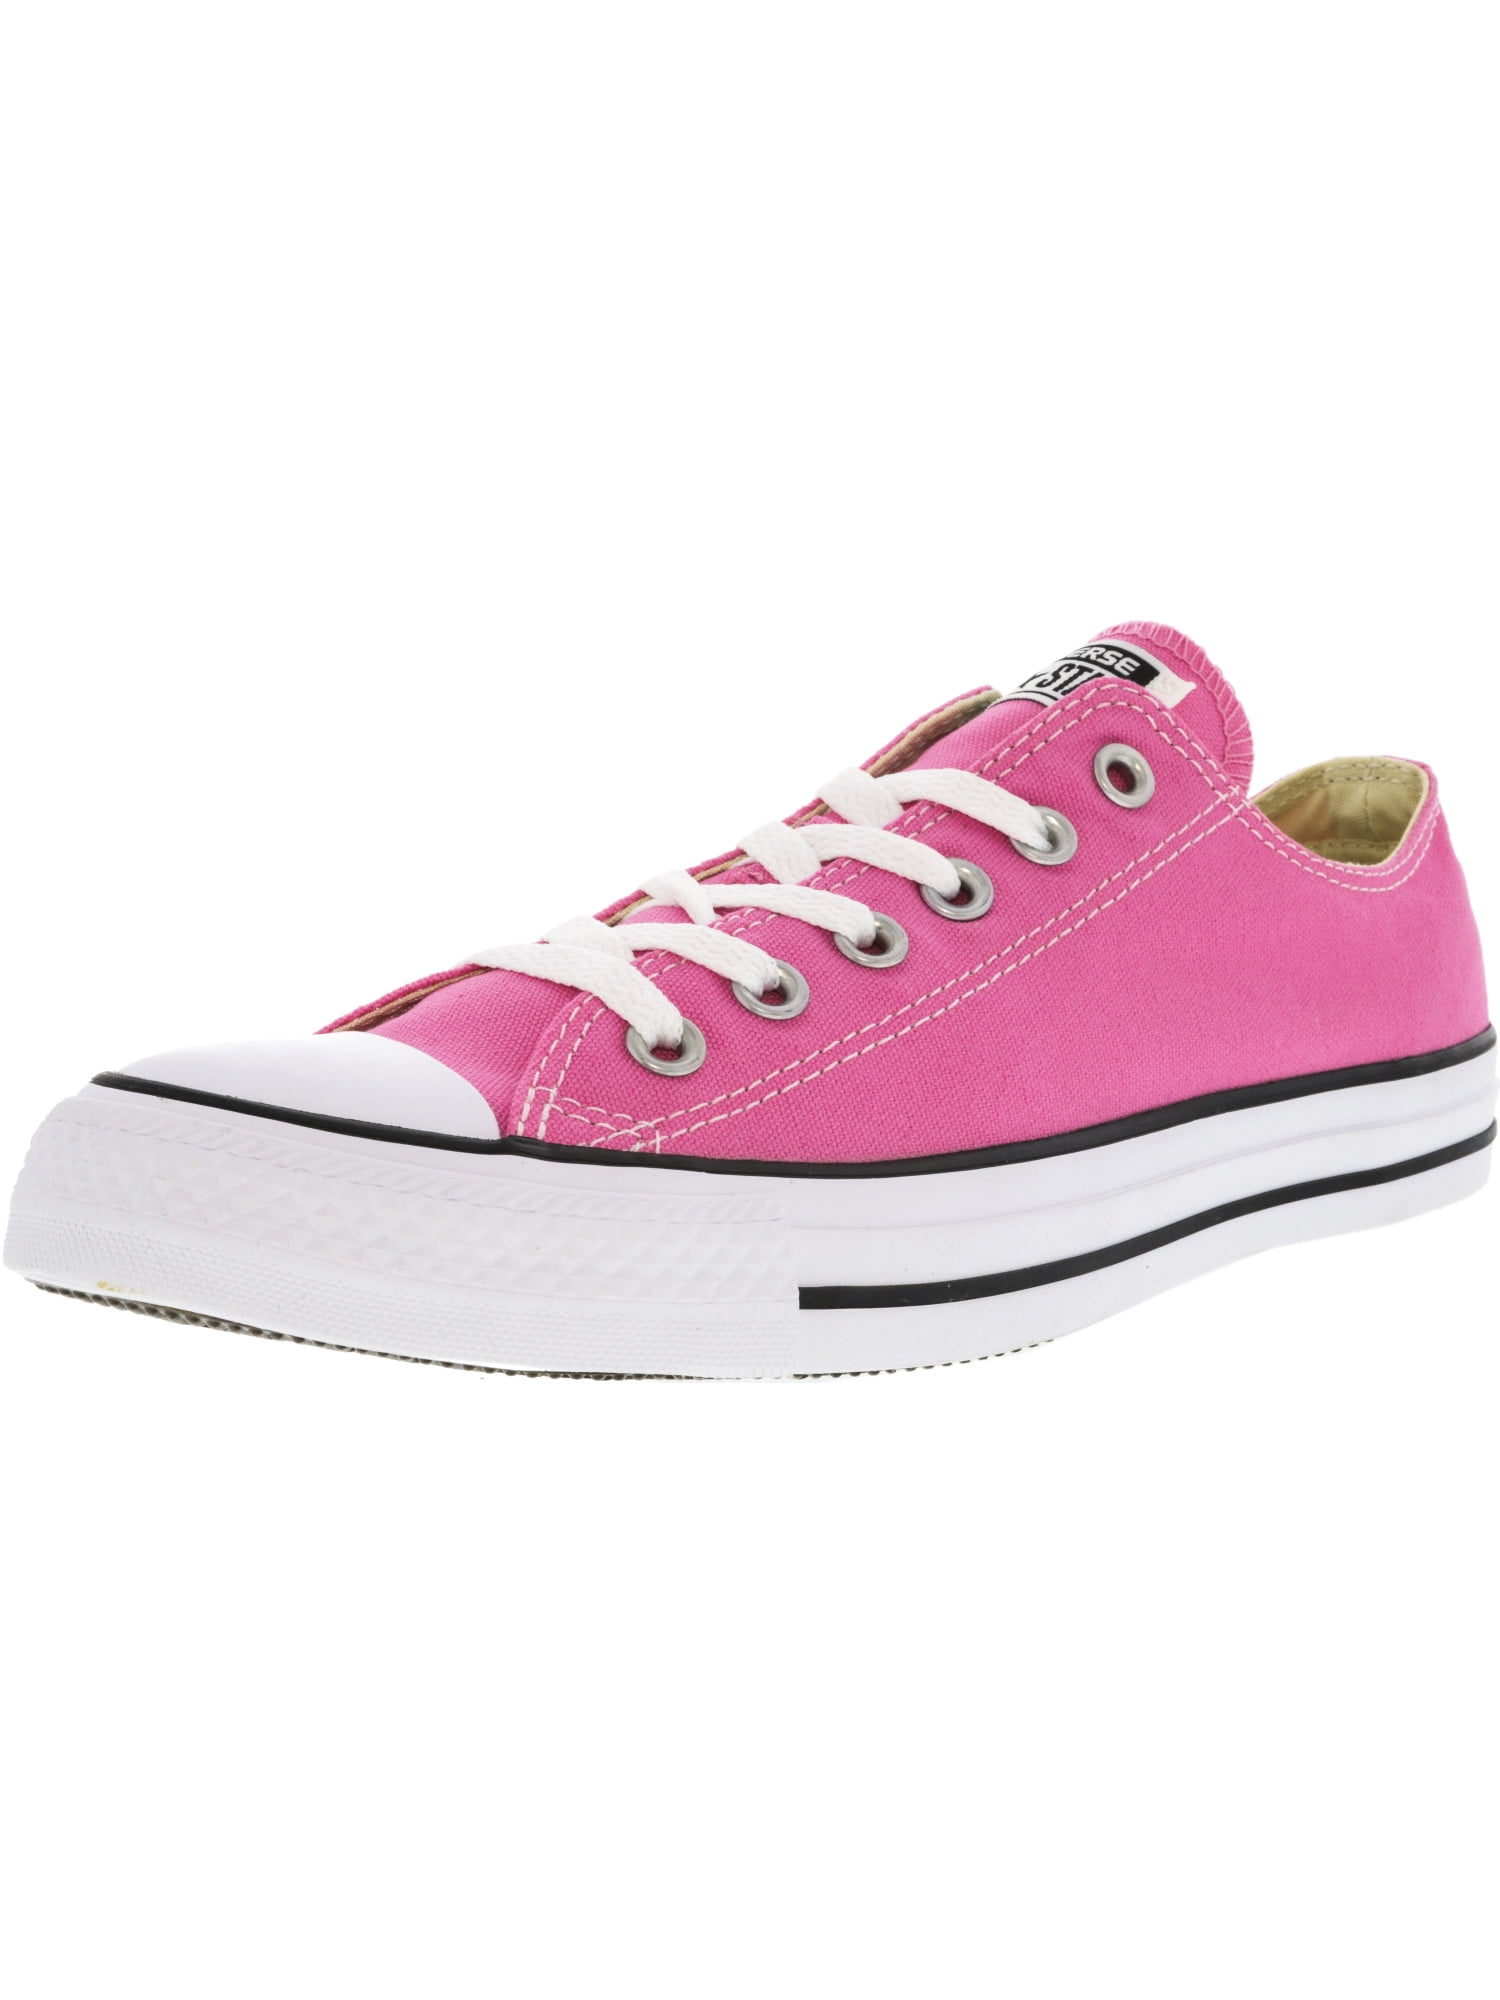 Converse All Pink Ankle-High Sneaker Walmart.com